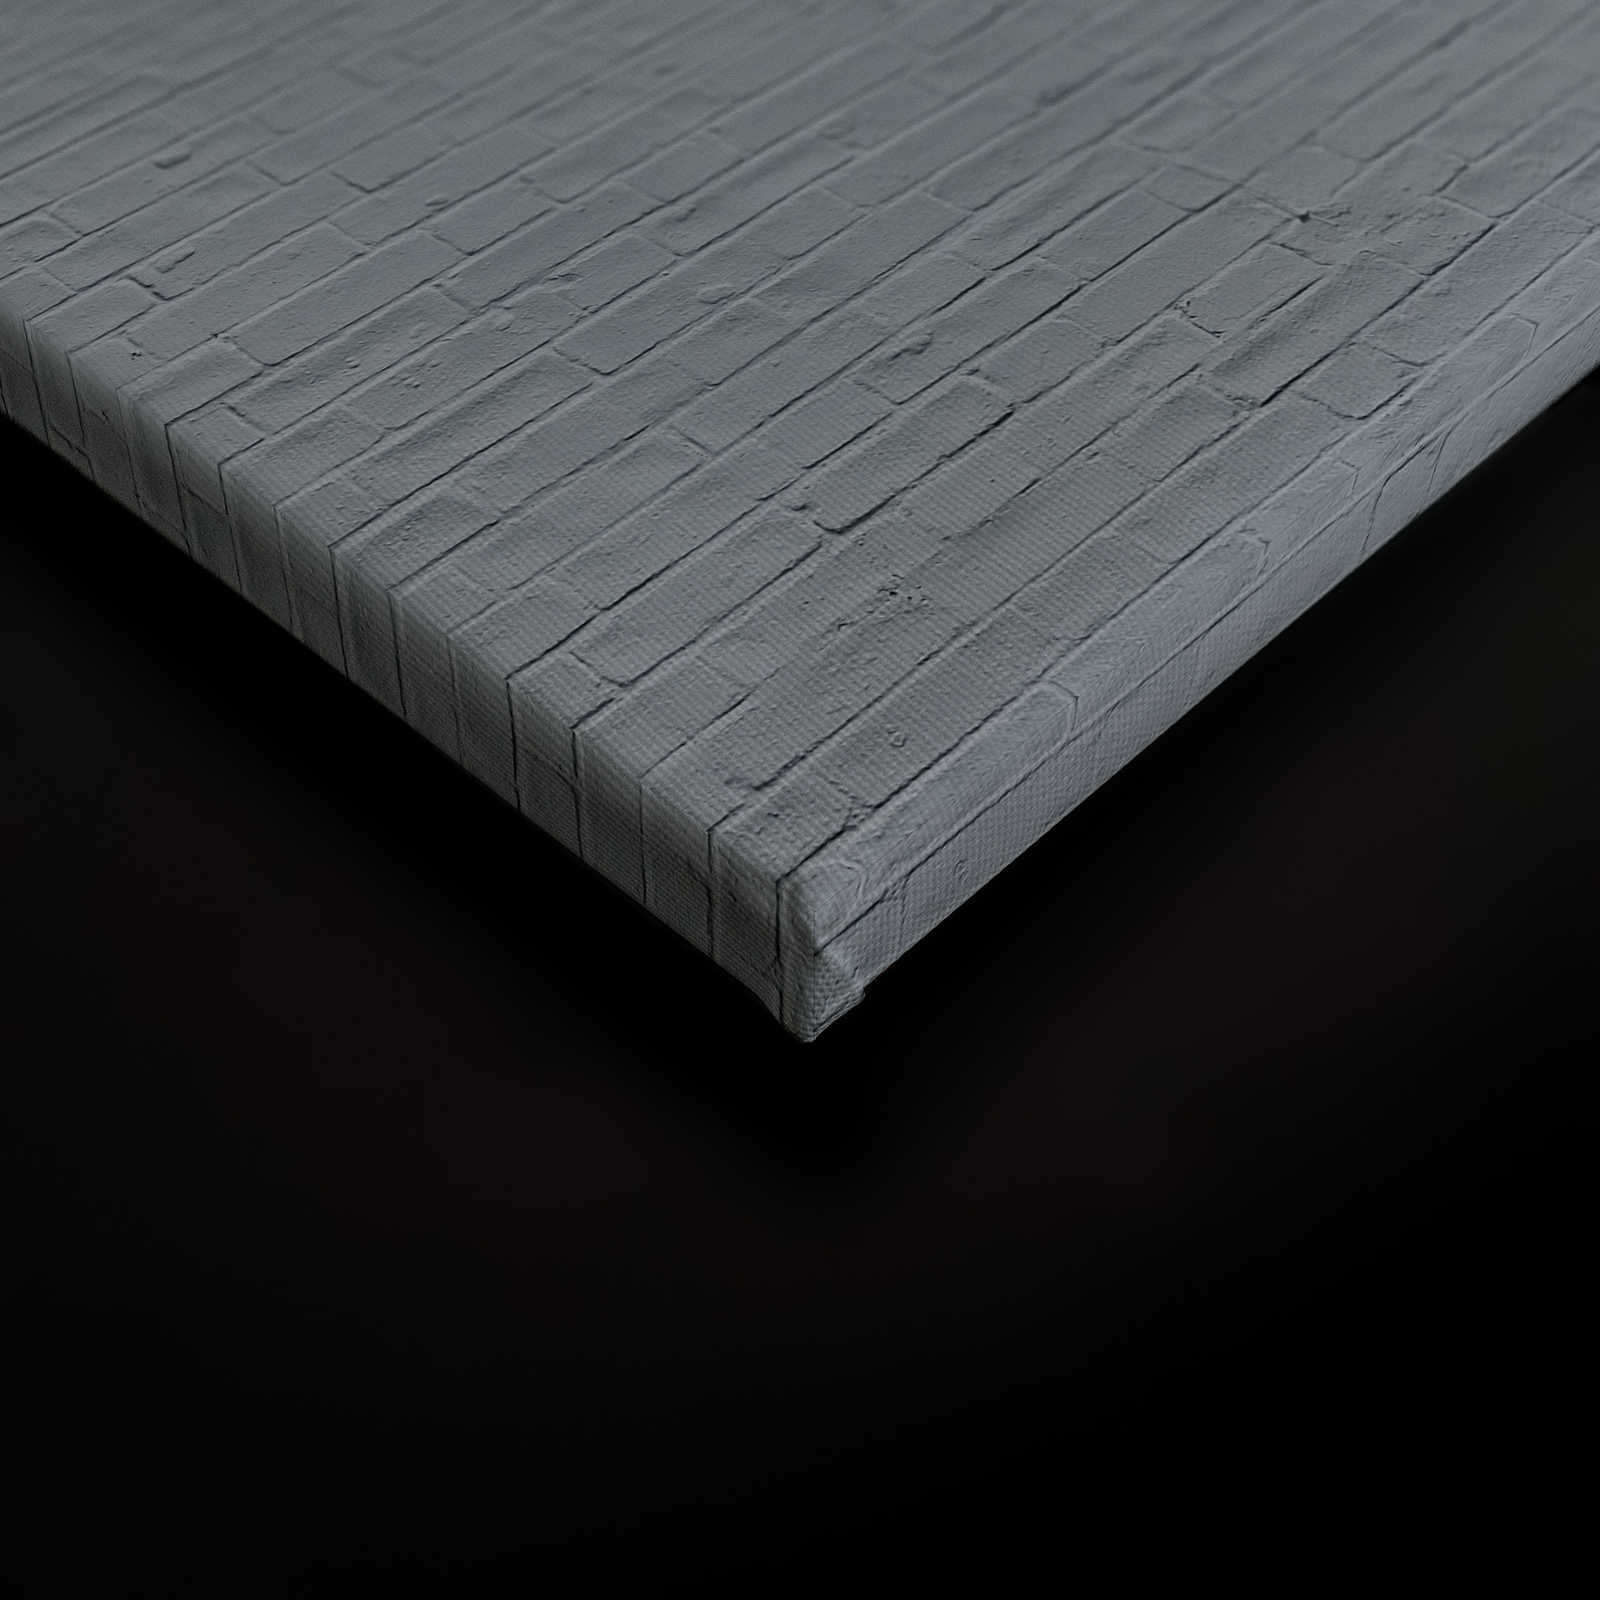             Mensaje 1 - Pared de ladrillo gris con refrán sobre lienzo - 0,90 m x 0,60 m
        